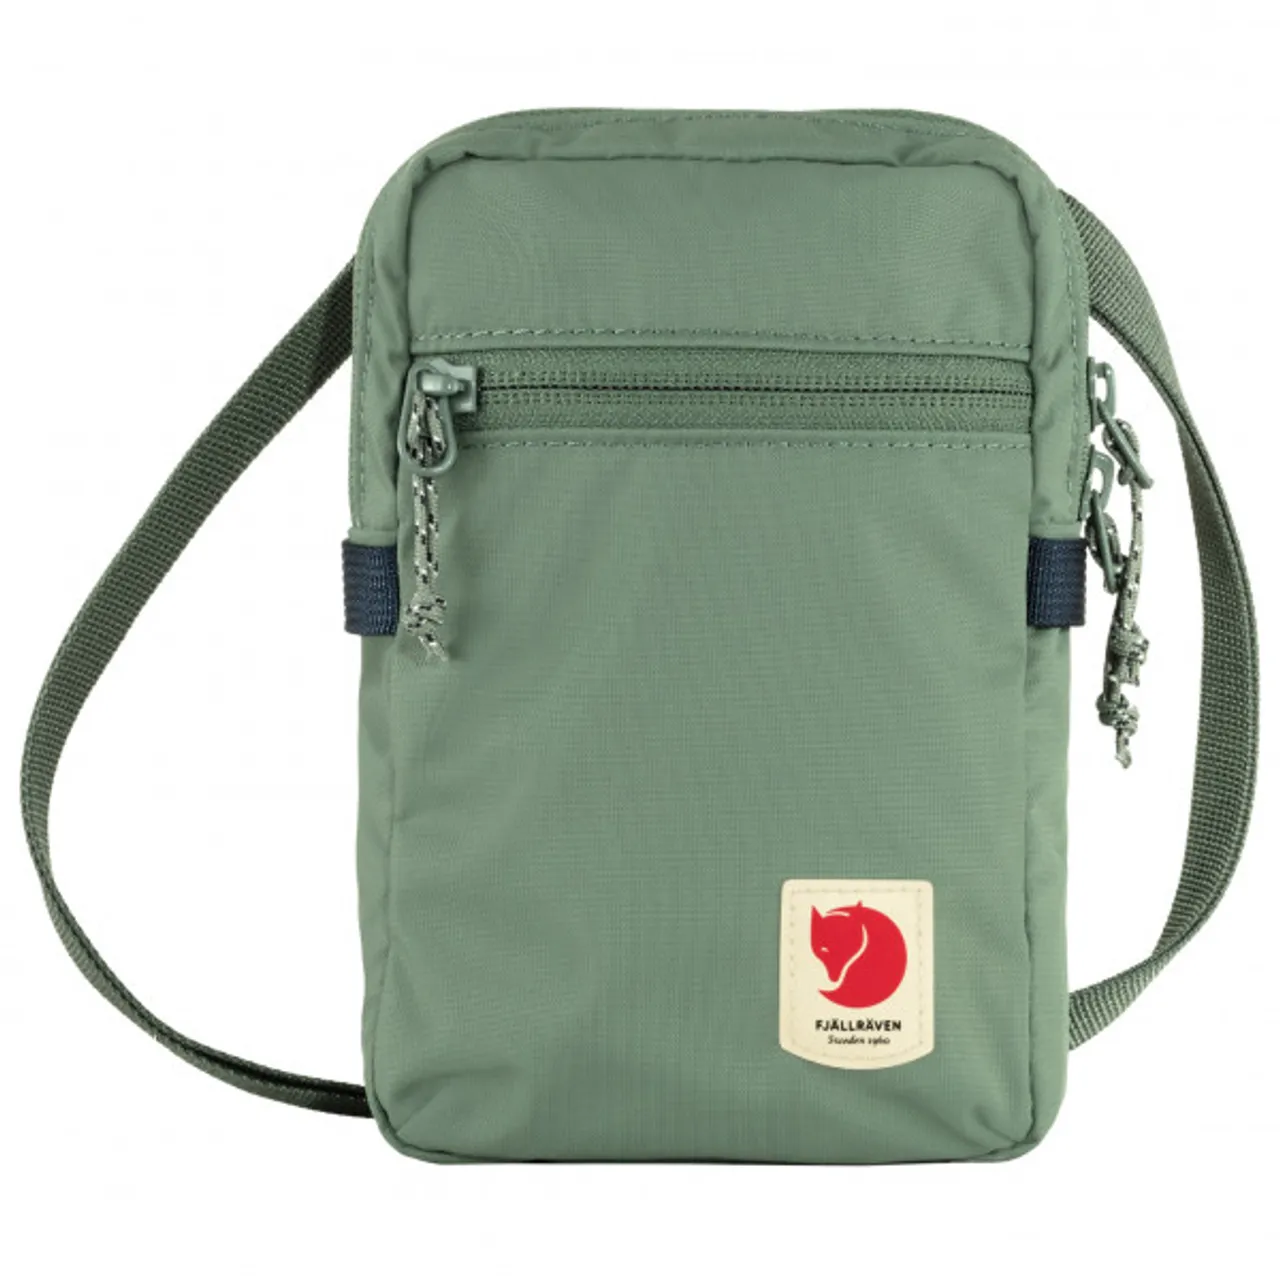 Fjällräven - High Coast Pocket 0,8 - Shoulder bag size 0,8 l, green